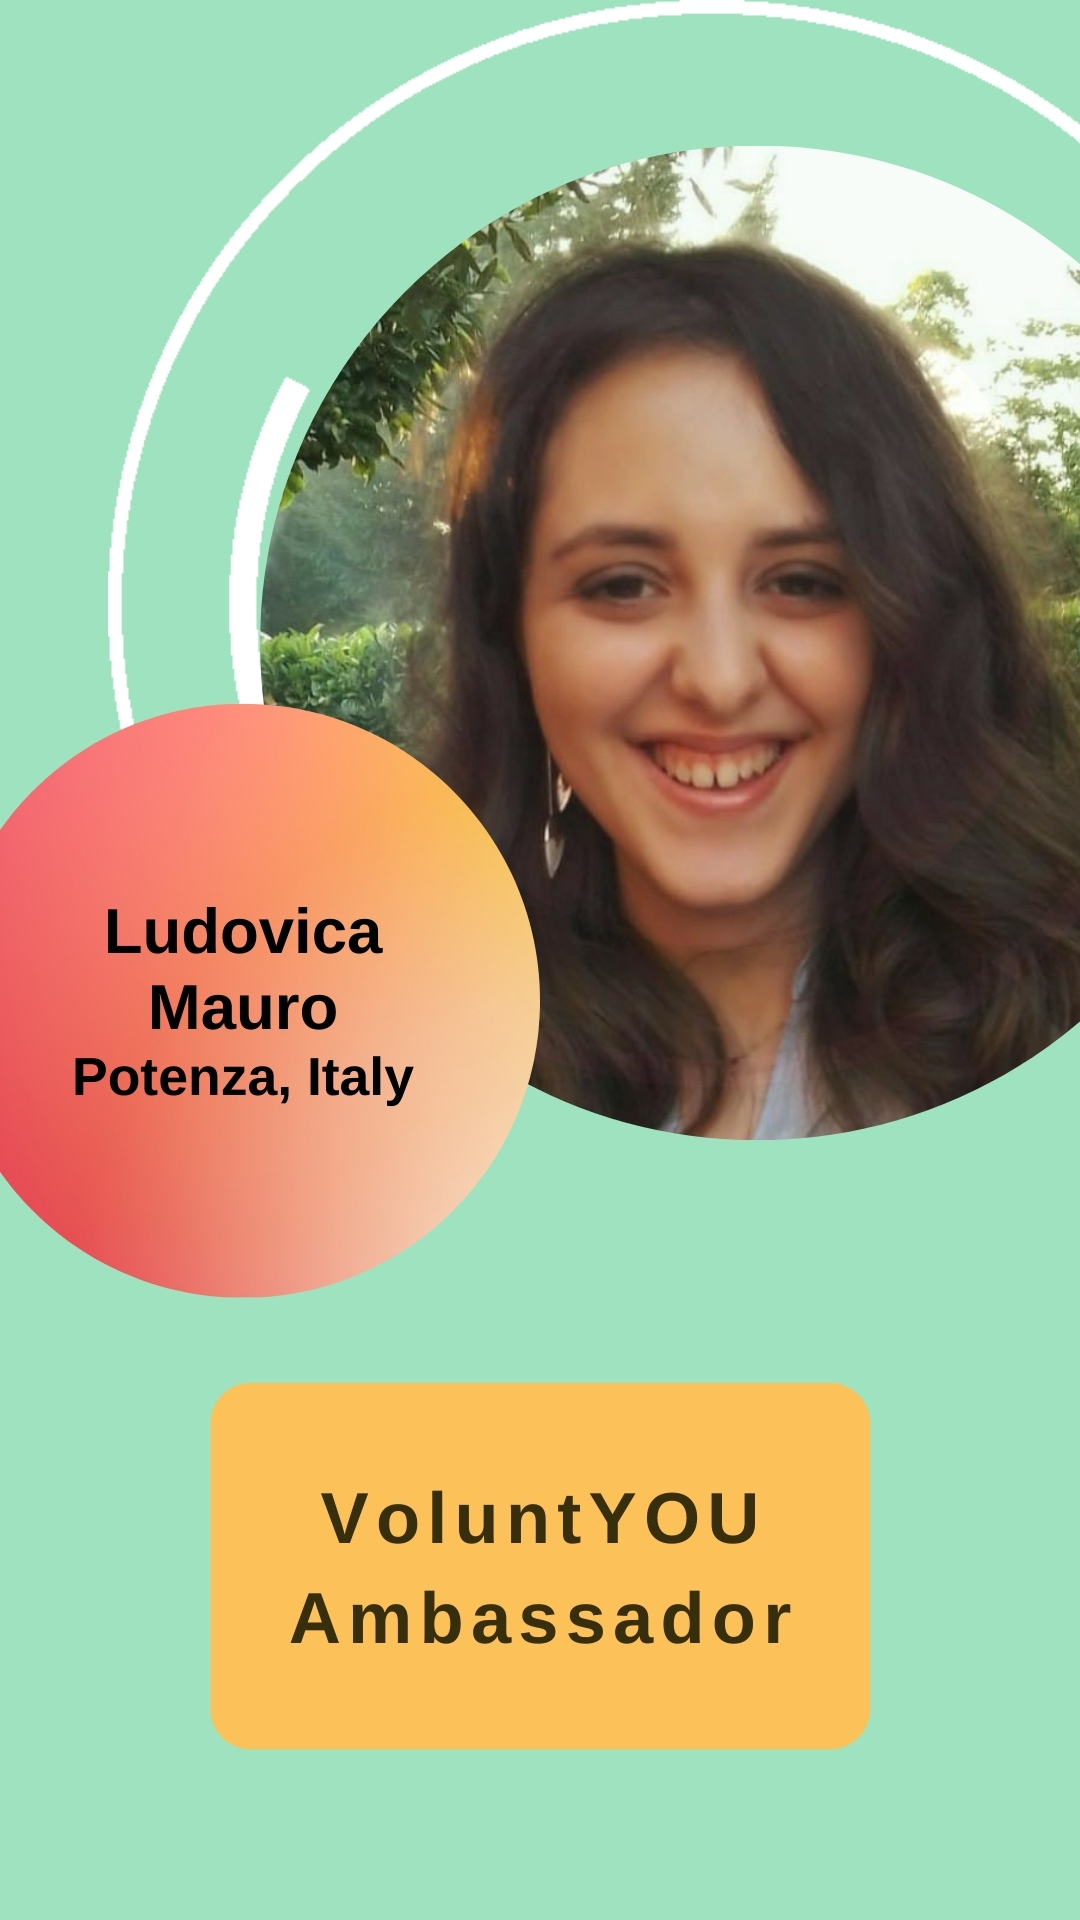 Ludovica Mauro - VoluntYOU Ambassador; Potenza, Italy